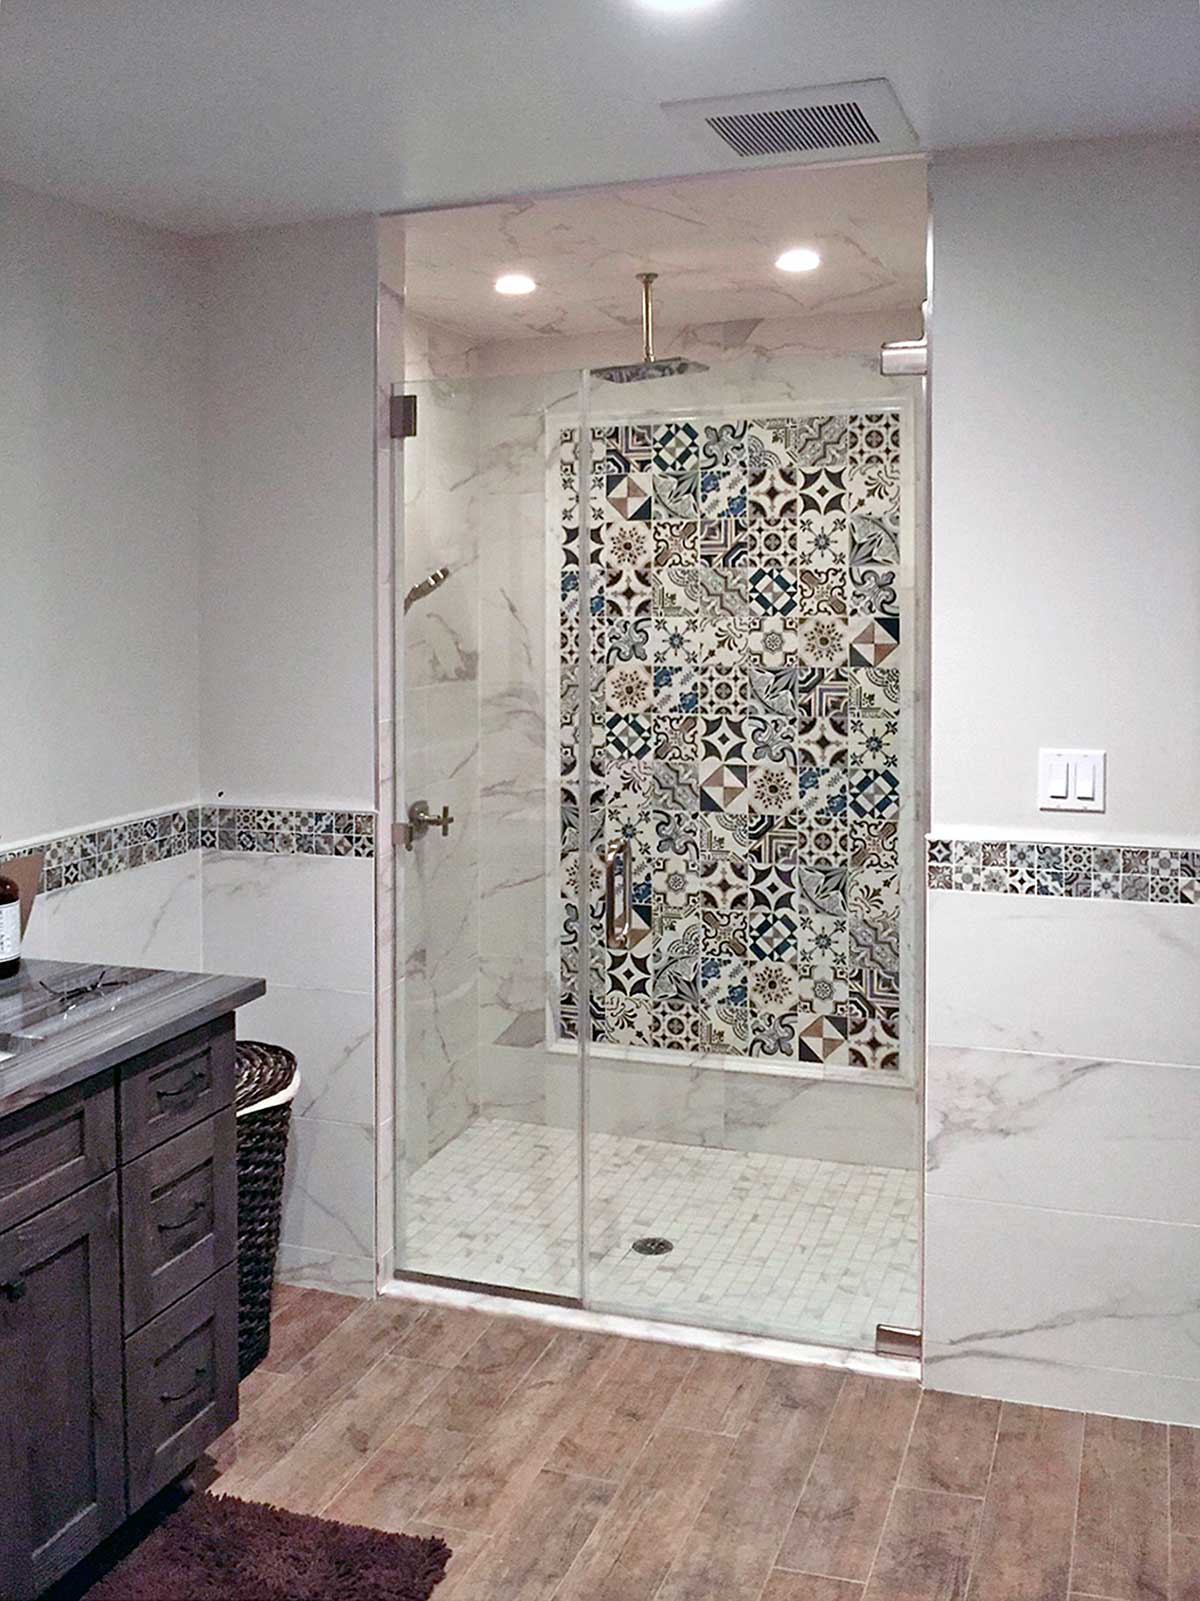 Decorative bathroom tile - Bristol Deco Dots BDD